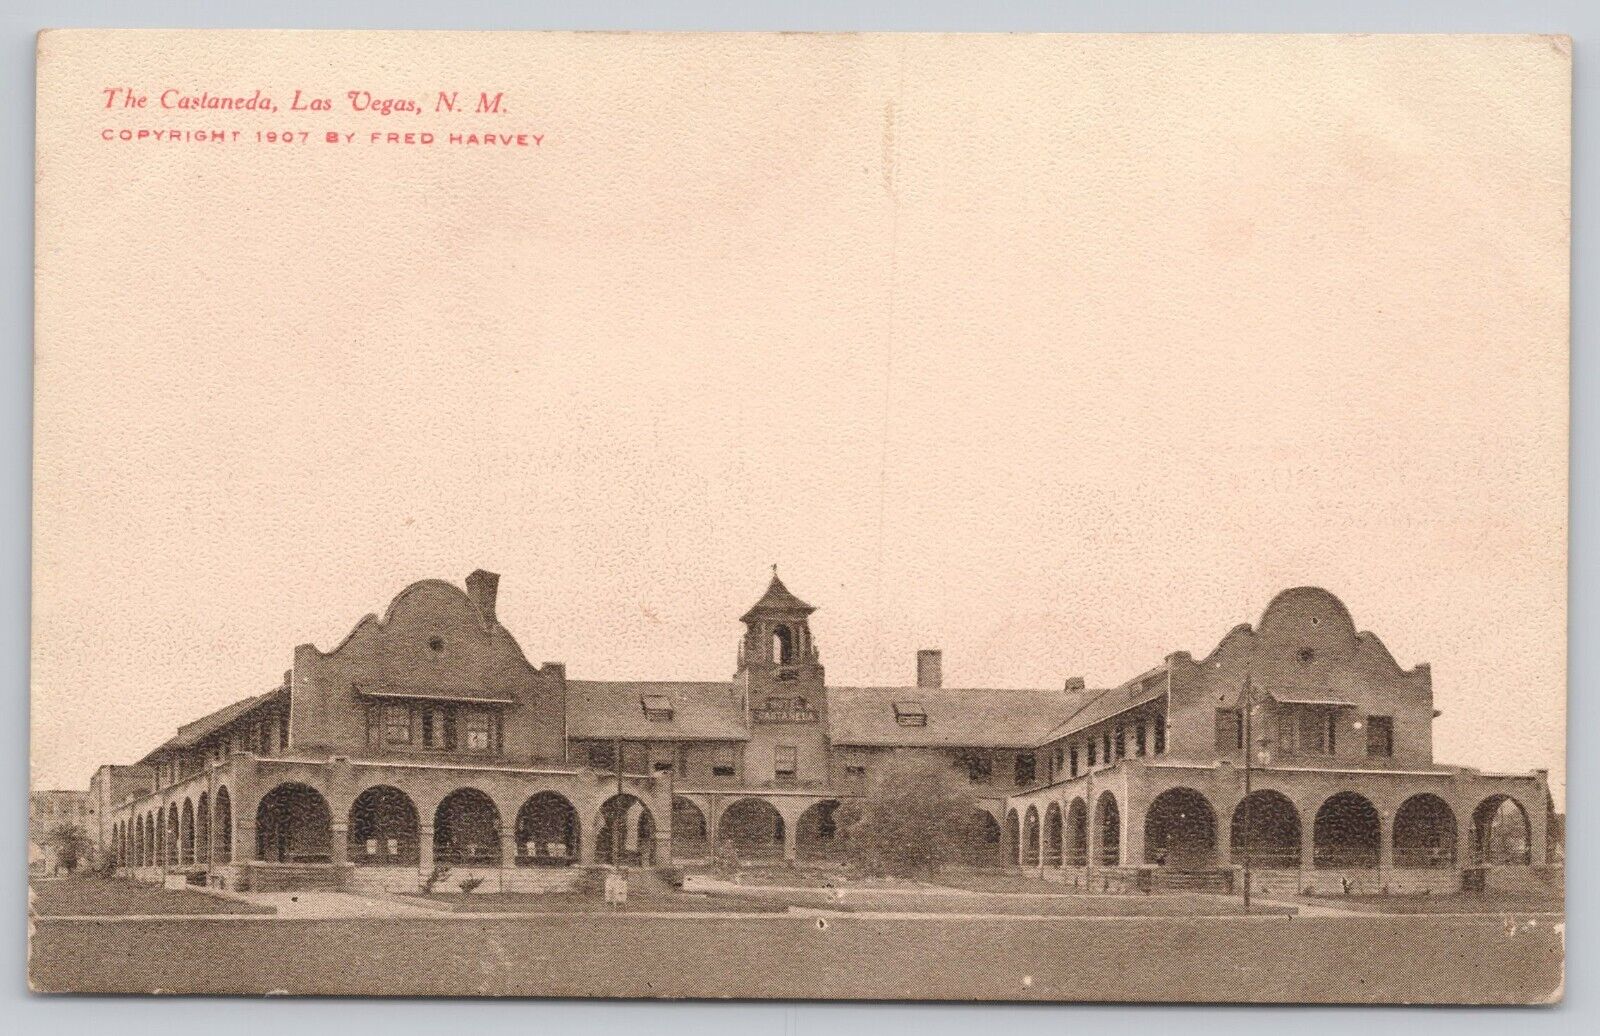 Las Vegas New Mexico Fred Harvey Castaneda Hotel Railroad Depot Vintage Postcard